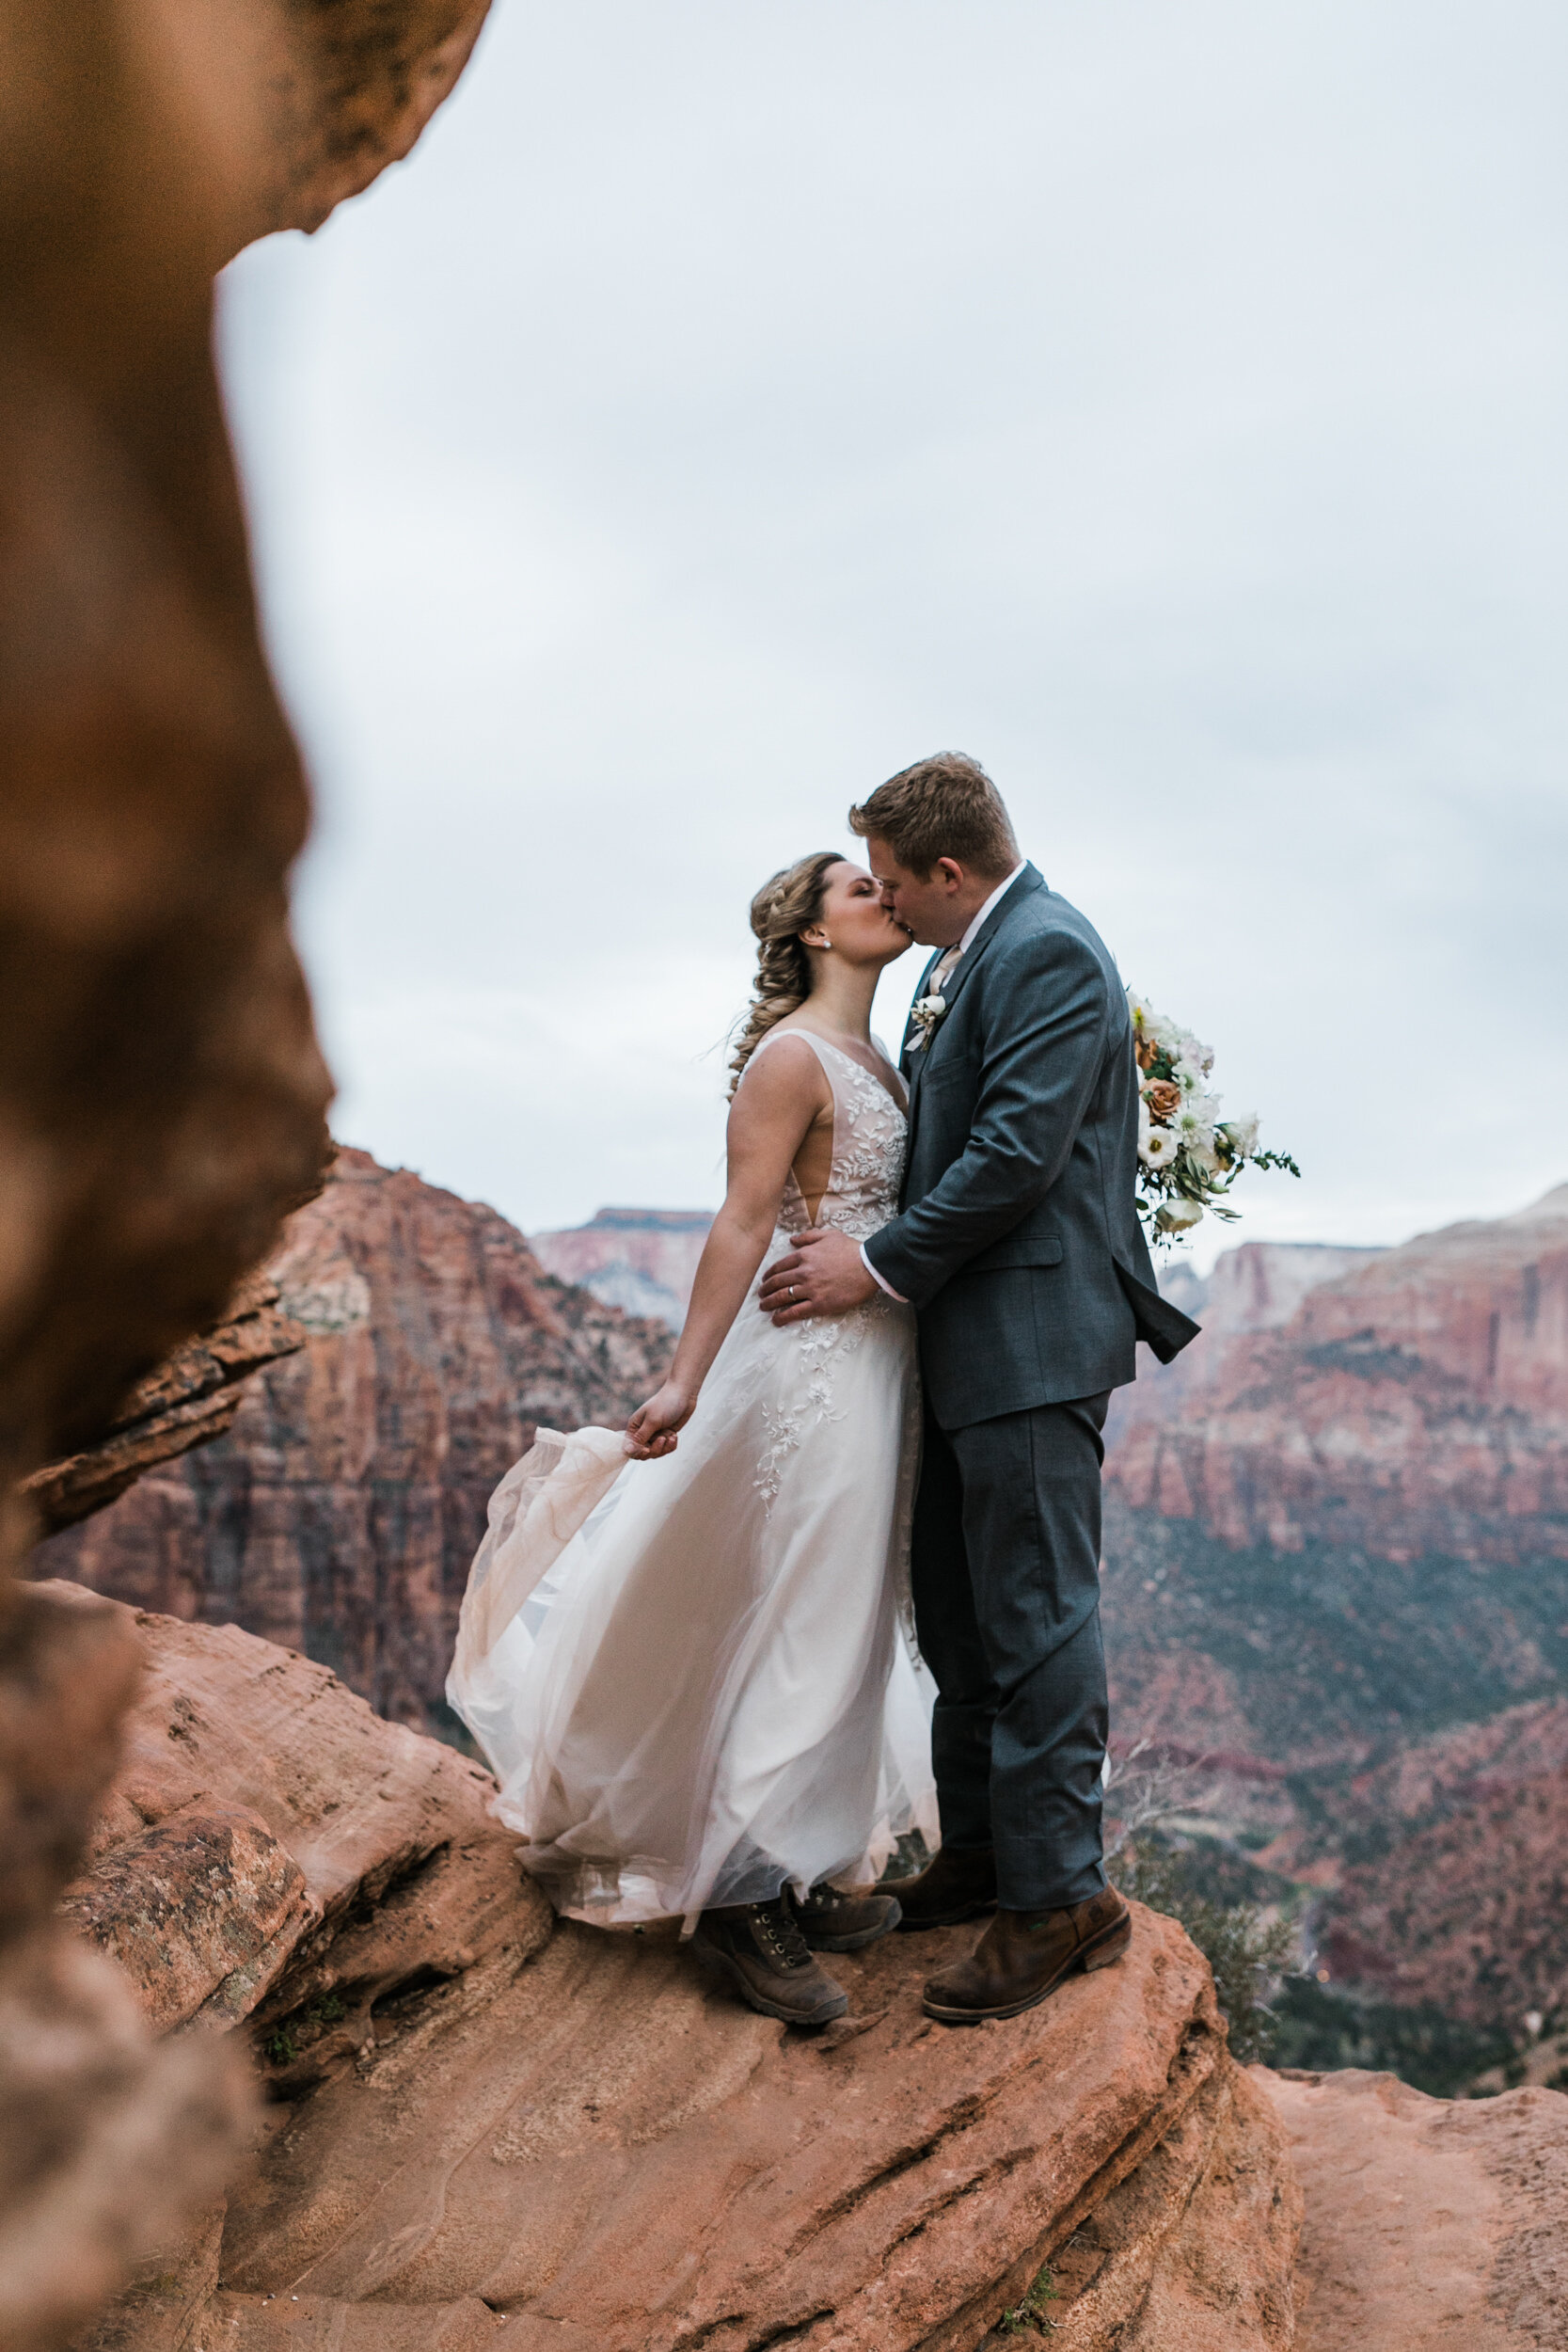 Intimate Zion Elopement | Adventure Wedding | The Hearnes Photography